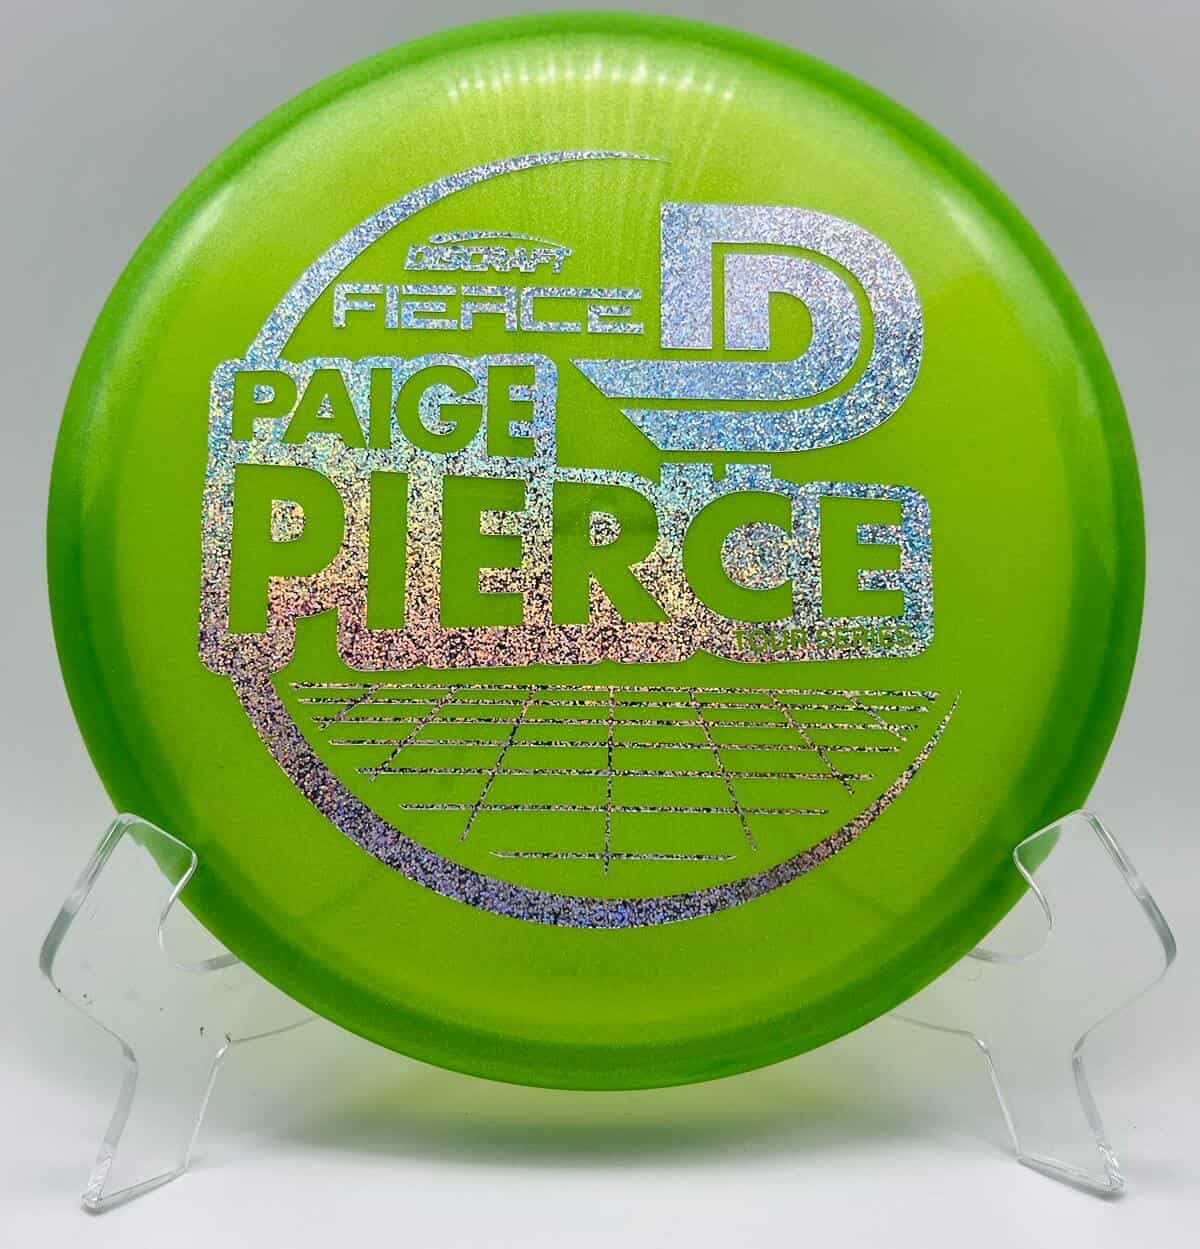 2021 Paige Pierce Tour Series IMG 9902 00 Metallic Z Fierce (2021 Paige Pierce Tour Series)